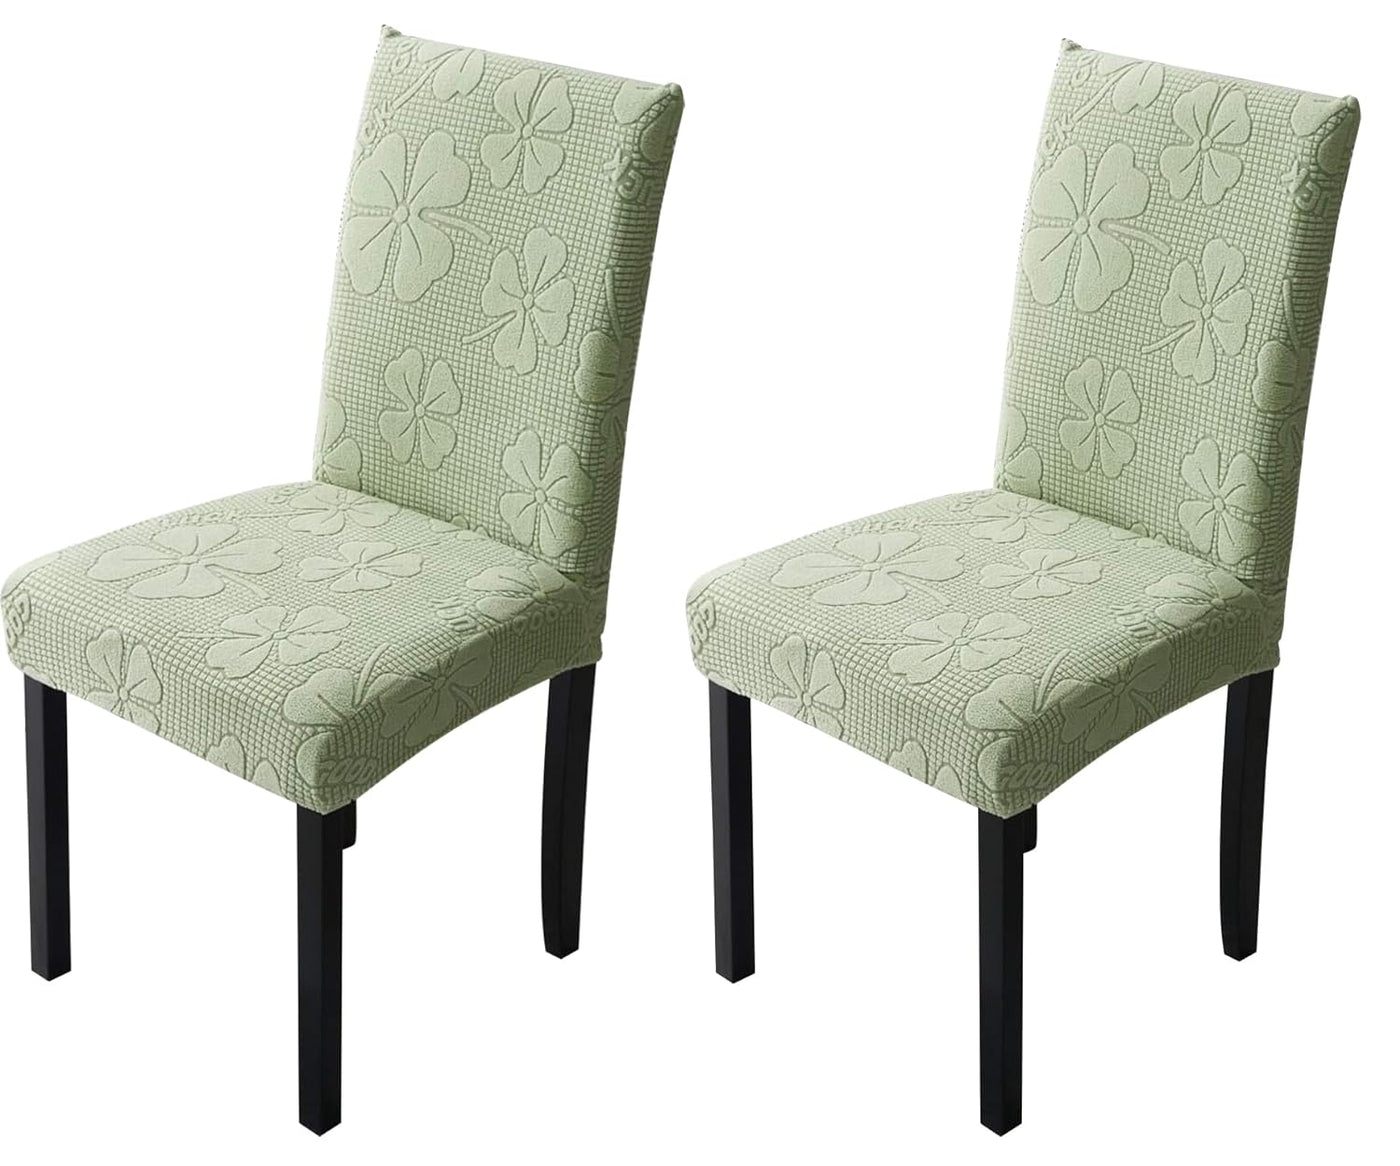 Elastic Jacquard Chair Cover (Flower Green)